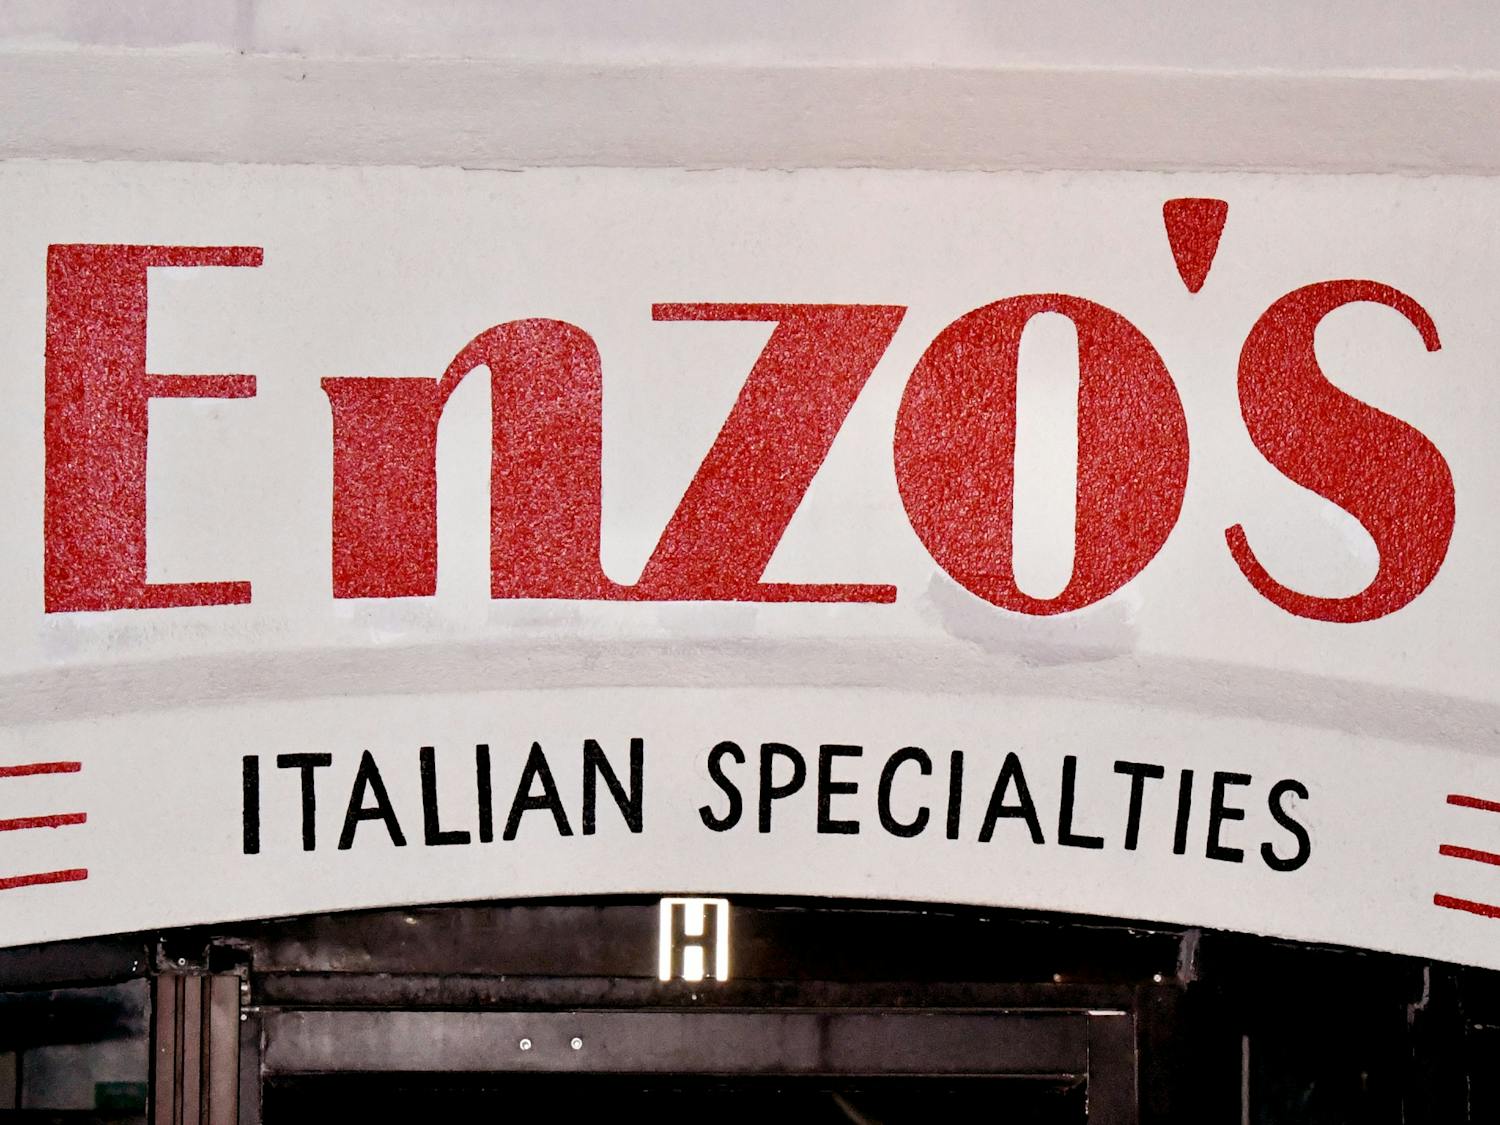 Enzo's Delicatessen is an Italian deli located in Five Points 